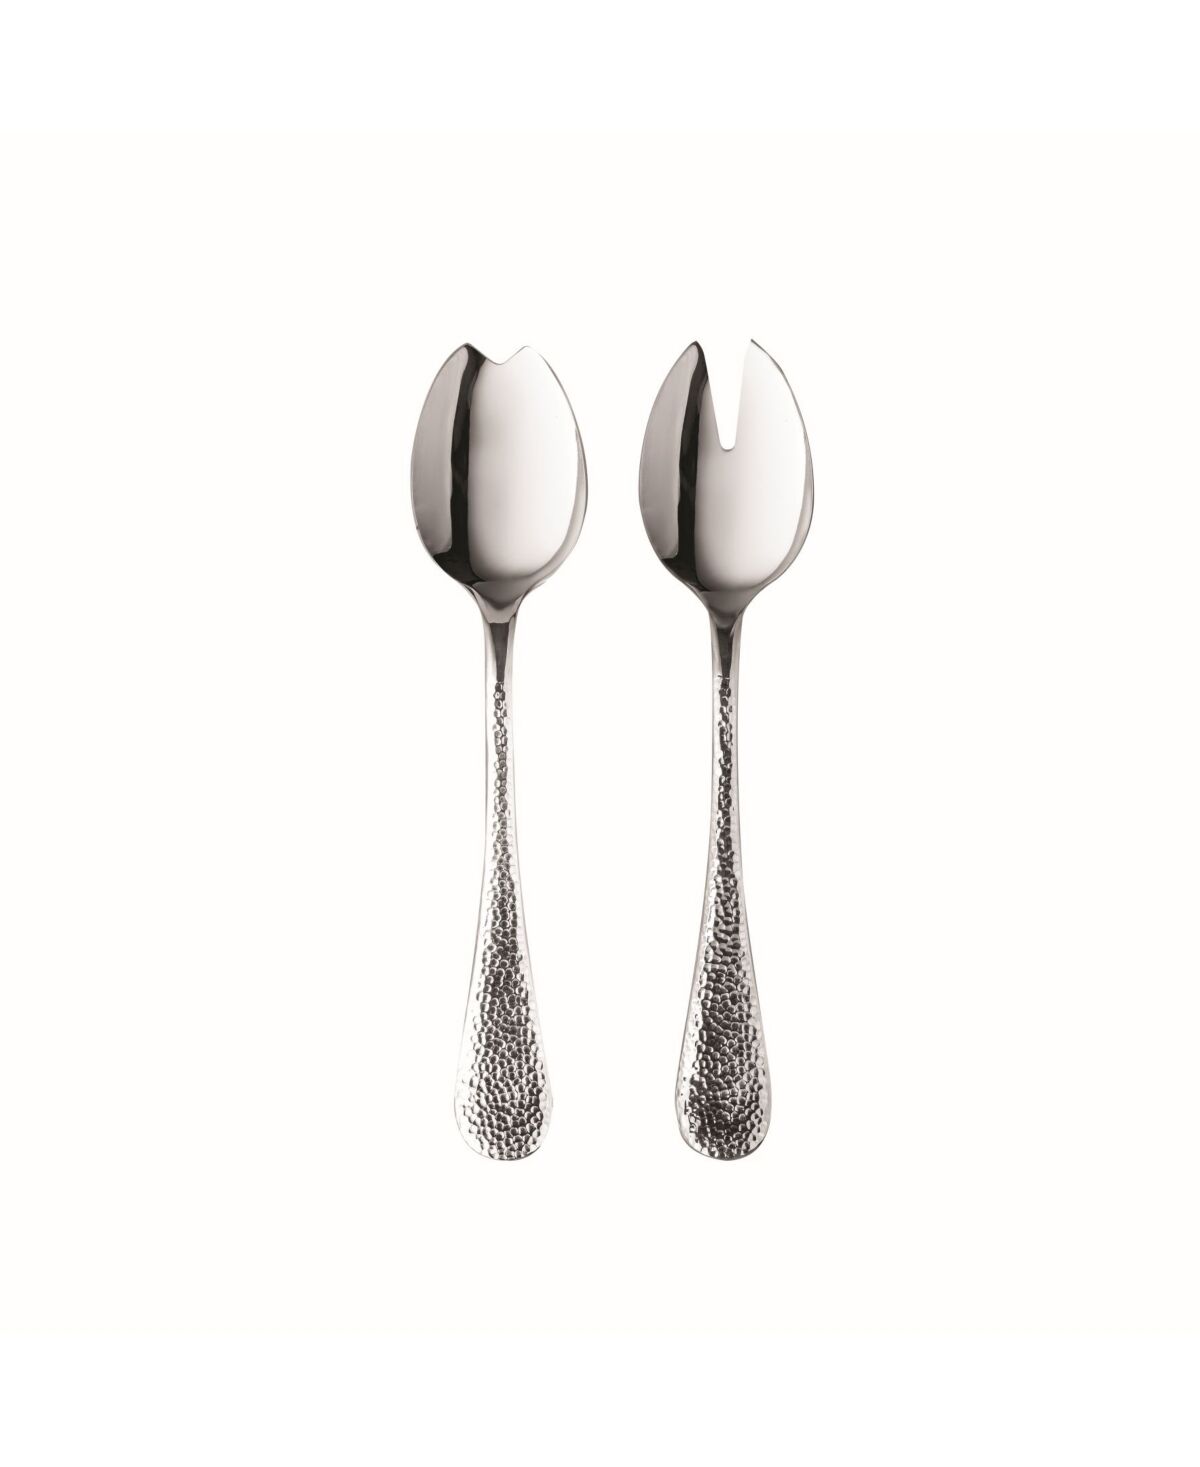 Mepra Salad Servers Fork and Spoon Flatware Set, Set of 2 - Silver-tone